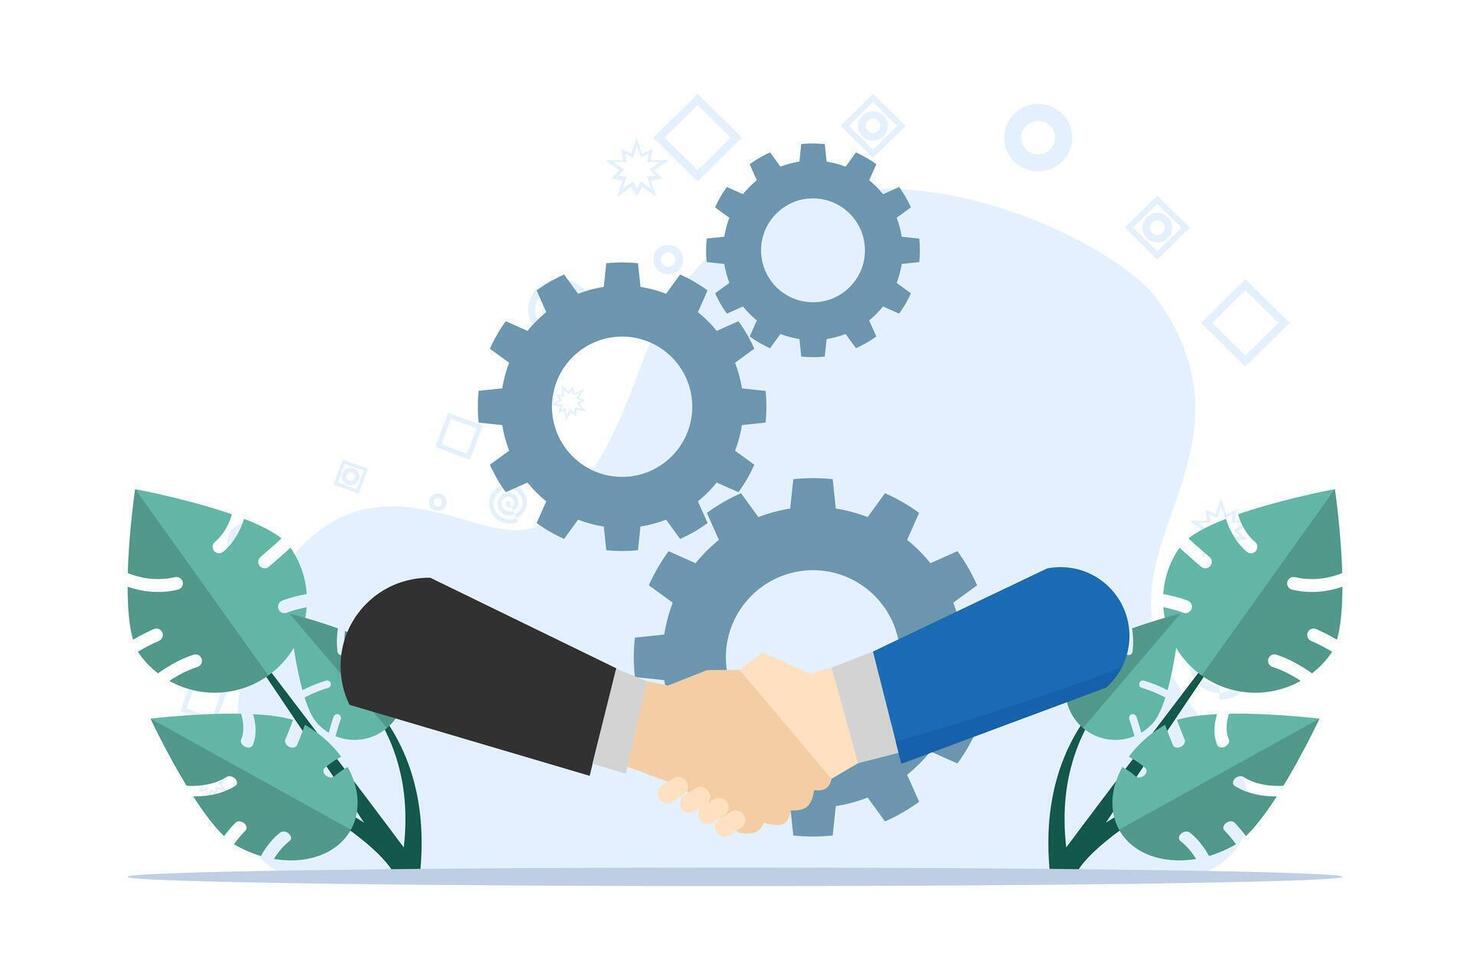 Cooperation handshake concept. Handshake meeting agreement. Handshake of business partners and other entrepreneurs. Flat vector illustration illustration on white background.